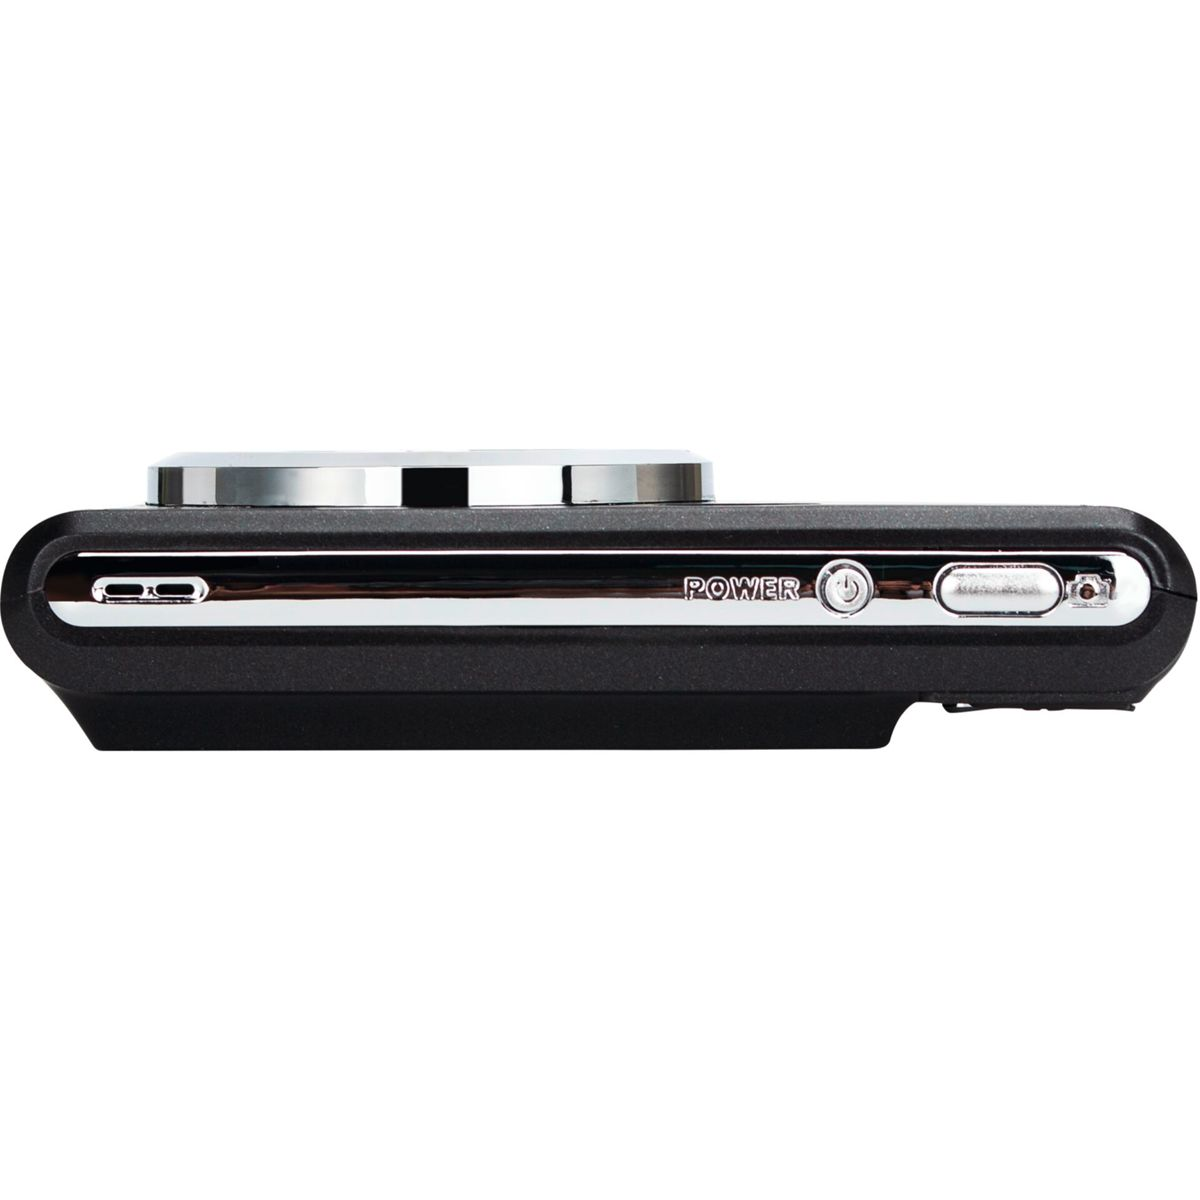 DC5200 schwarz, Zoom, LCL 8 x Digitalkamera opt. TFT AGFAPHOTO Compact Display- Cam